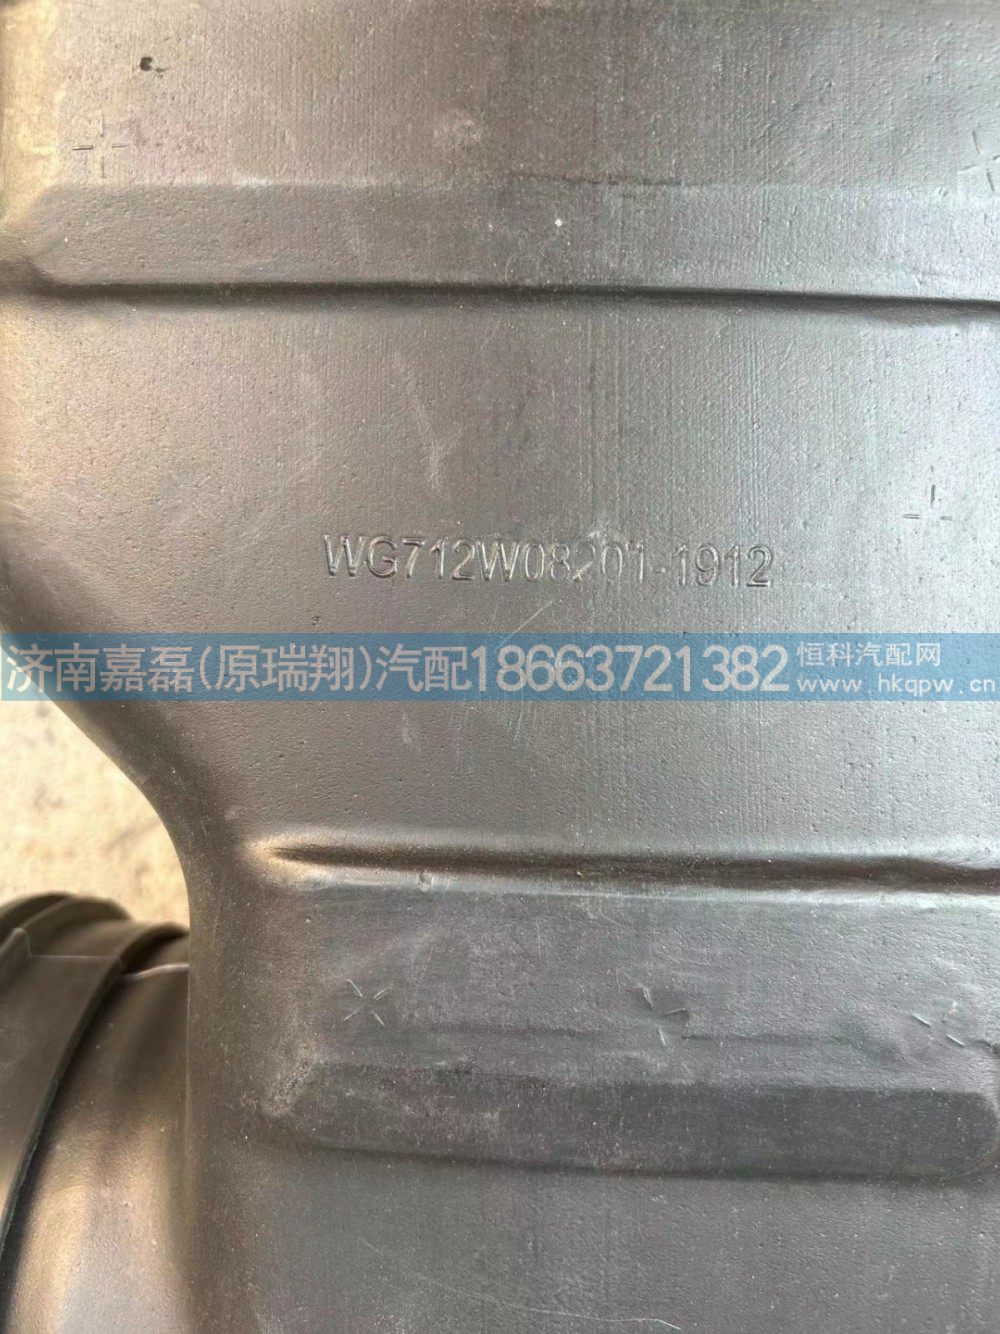 712W08201-1912,下进气道,济南嘉磊汽车配件有限公司(原济南瑞翔)